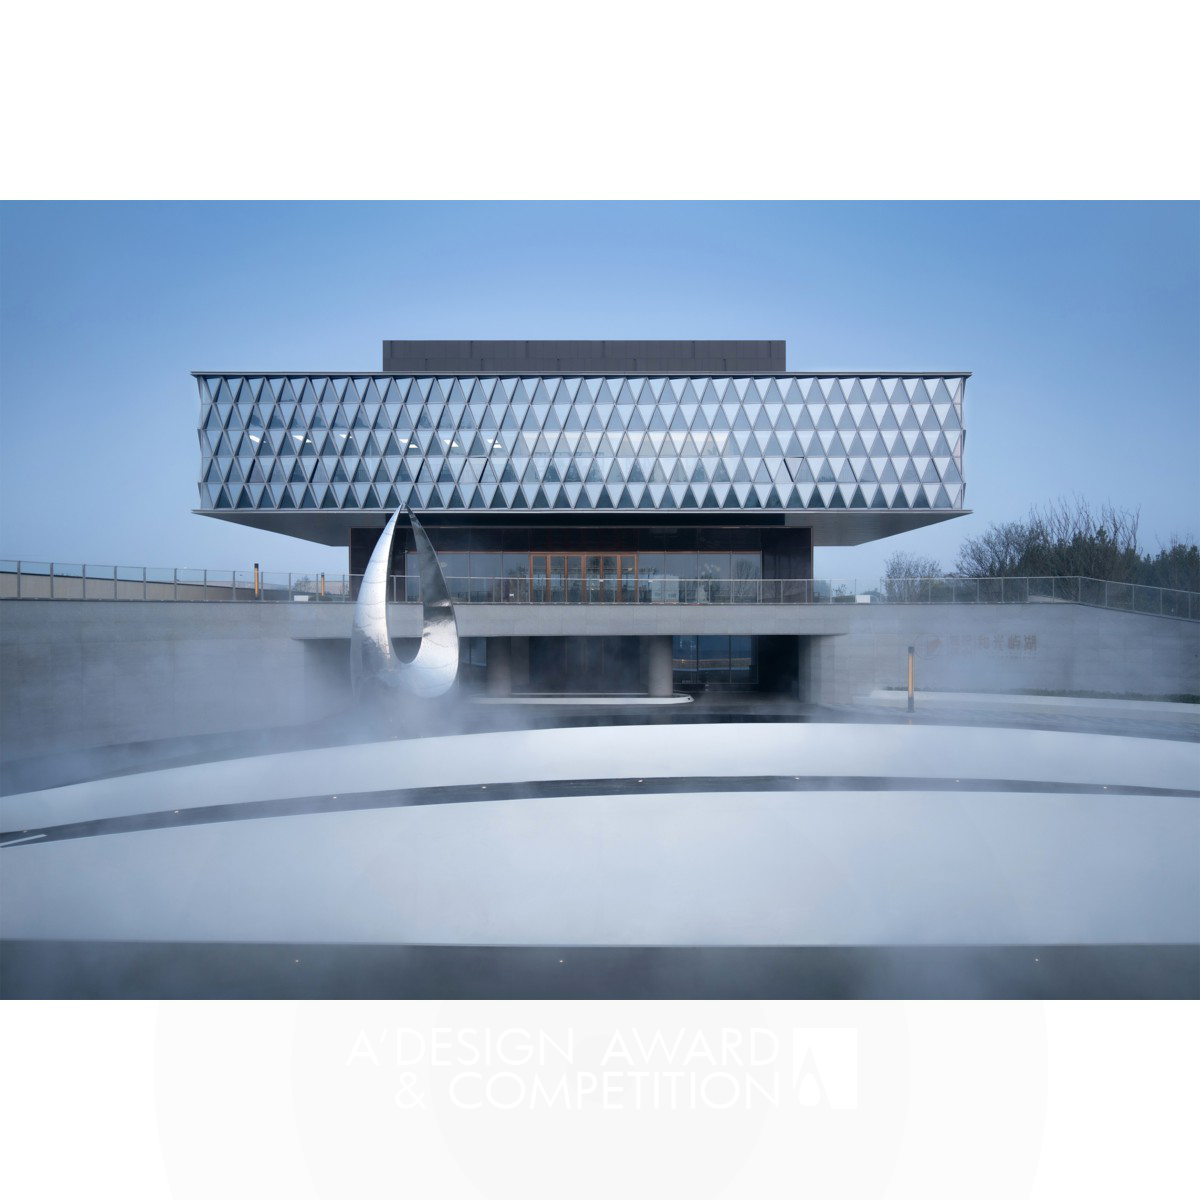 Zhubo Design wins Silver at the prestigious A' Architecture, Building and Structure Design Award with Kirin Island Exhibition Center.